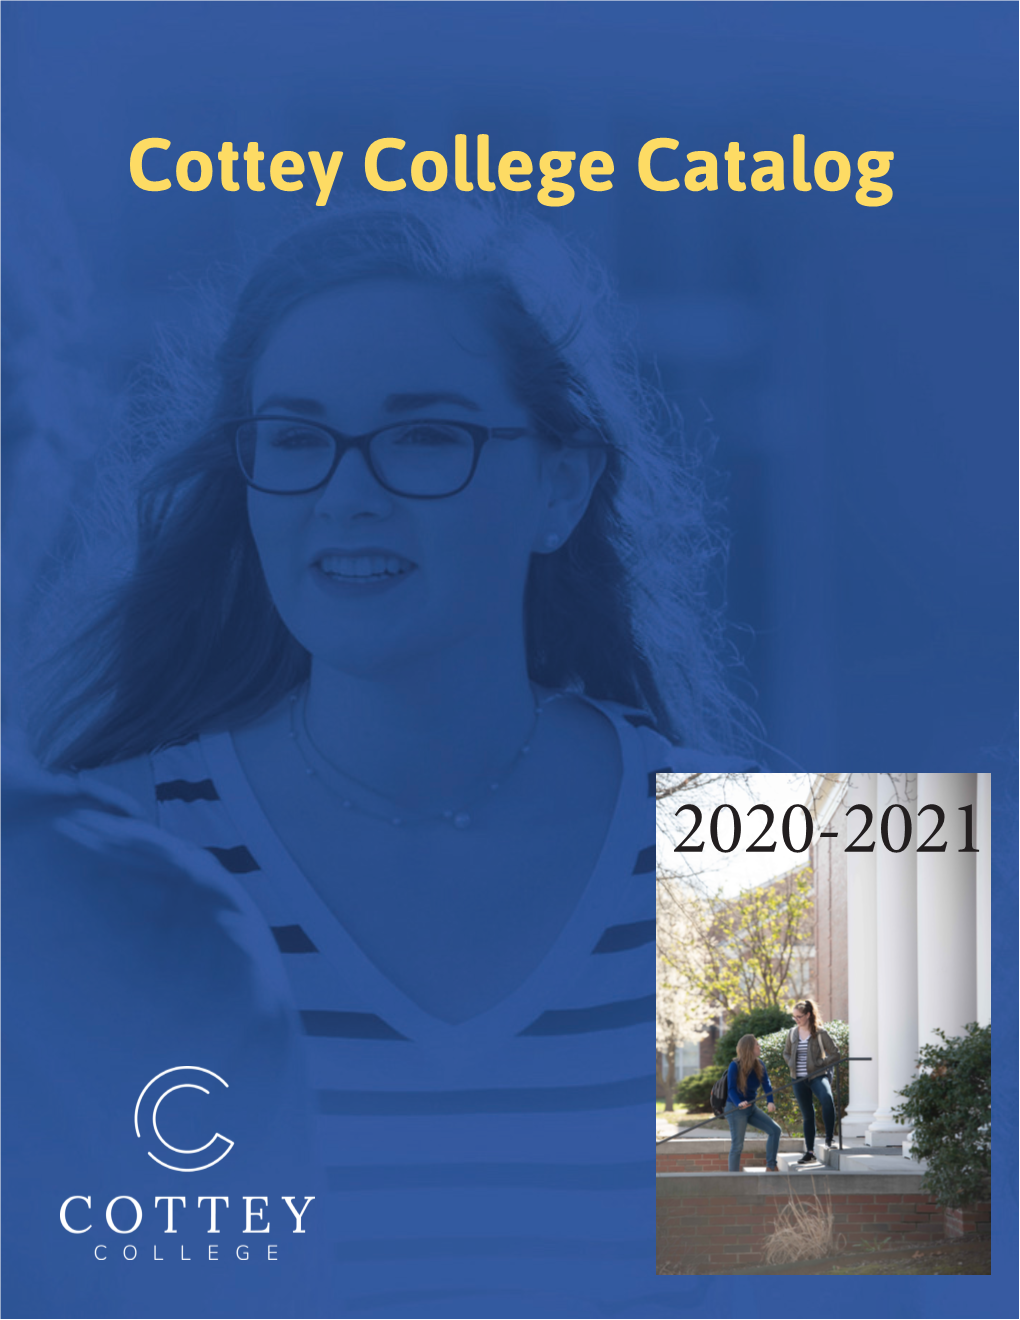 Cottey College Catalog 2020-2021